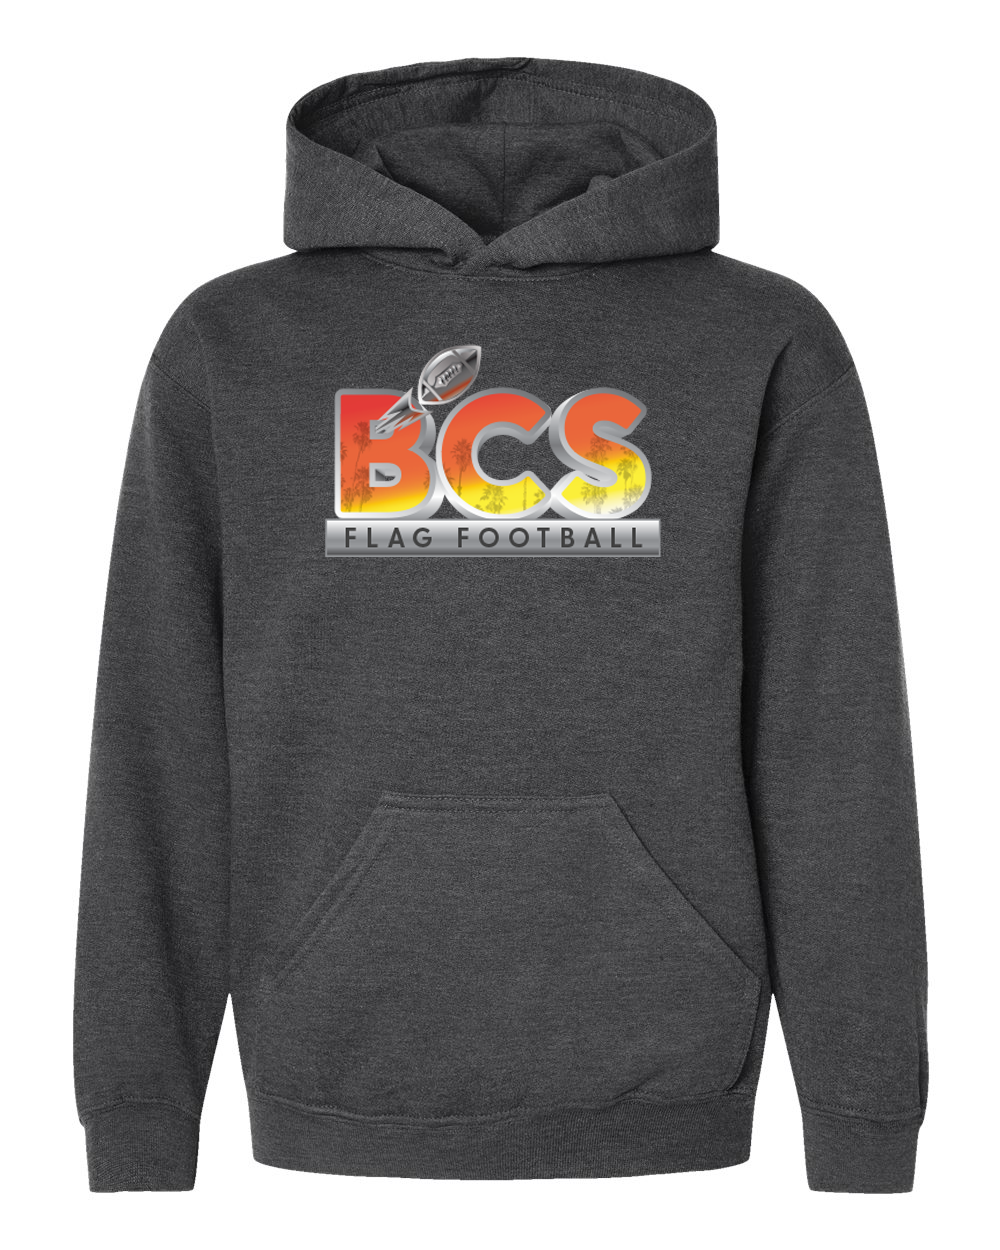 BCS Youth Hoodie